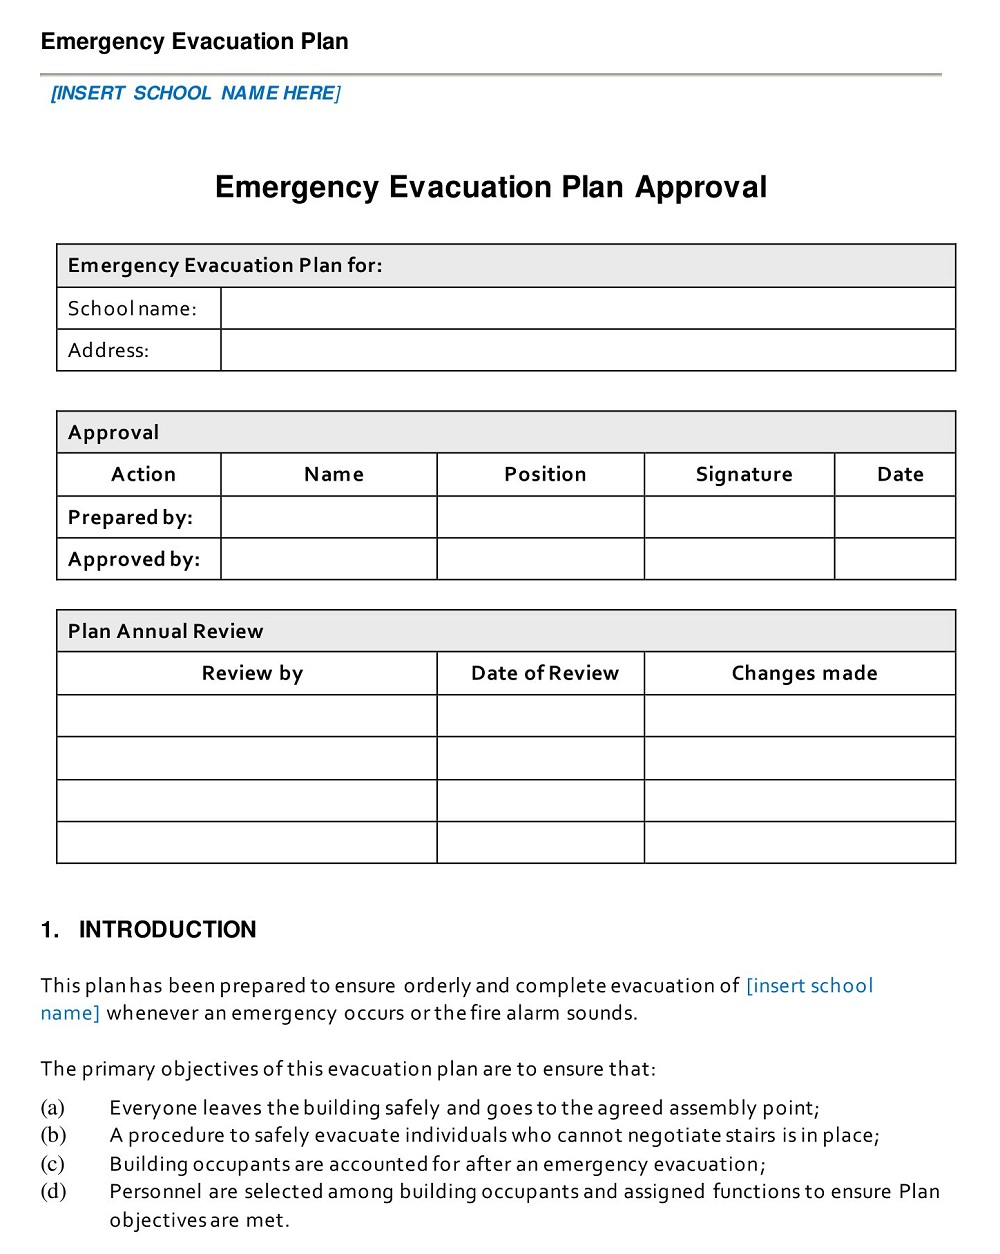 Emergency Evacuation Plan Approval